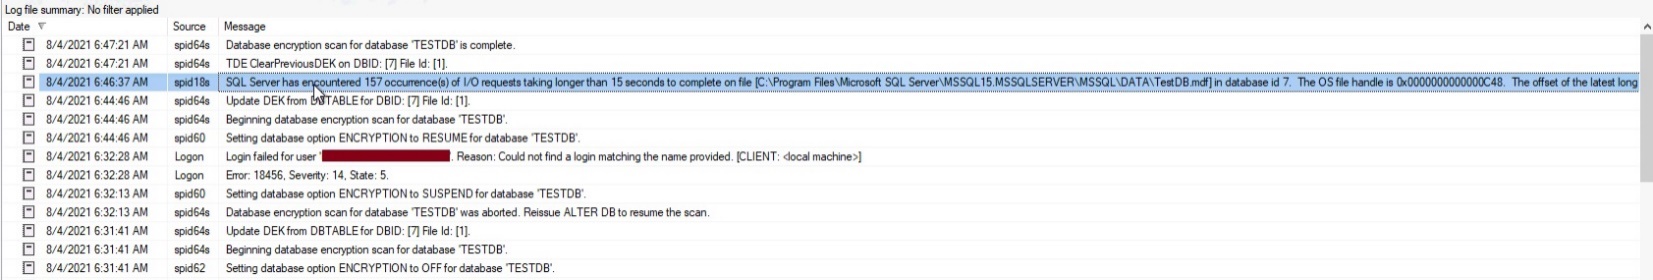 SQL Server error log during decryption process